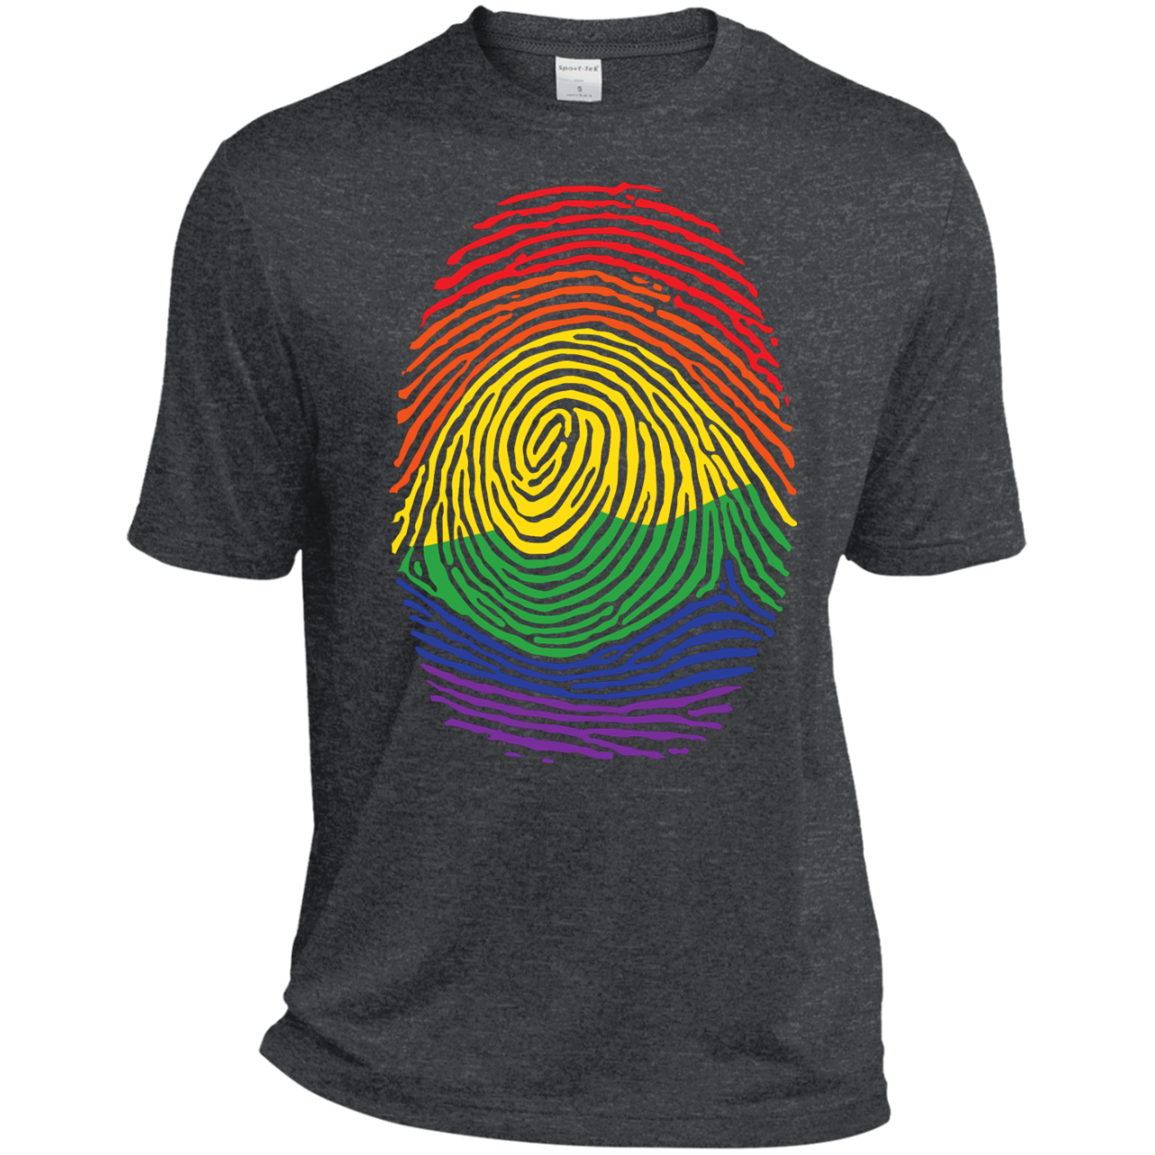 Gay Pride Thumb Print grey round neck Shirt Rainbow Thumb print men's tshirt